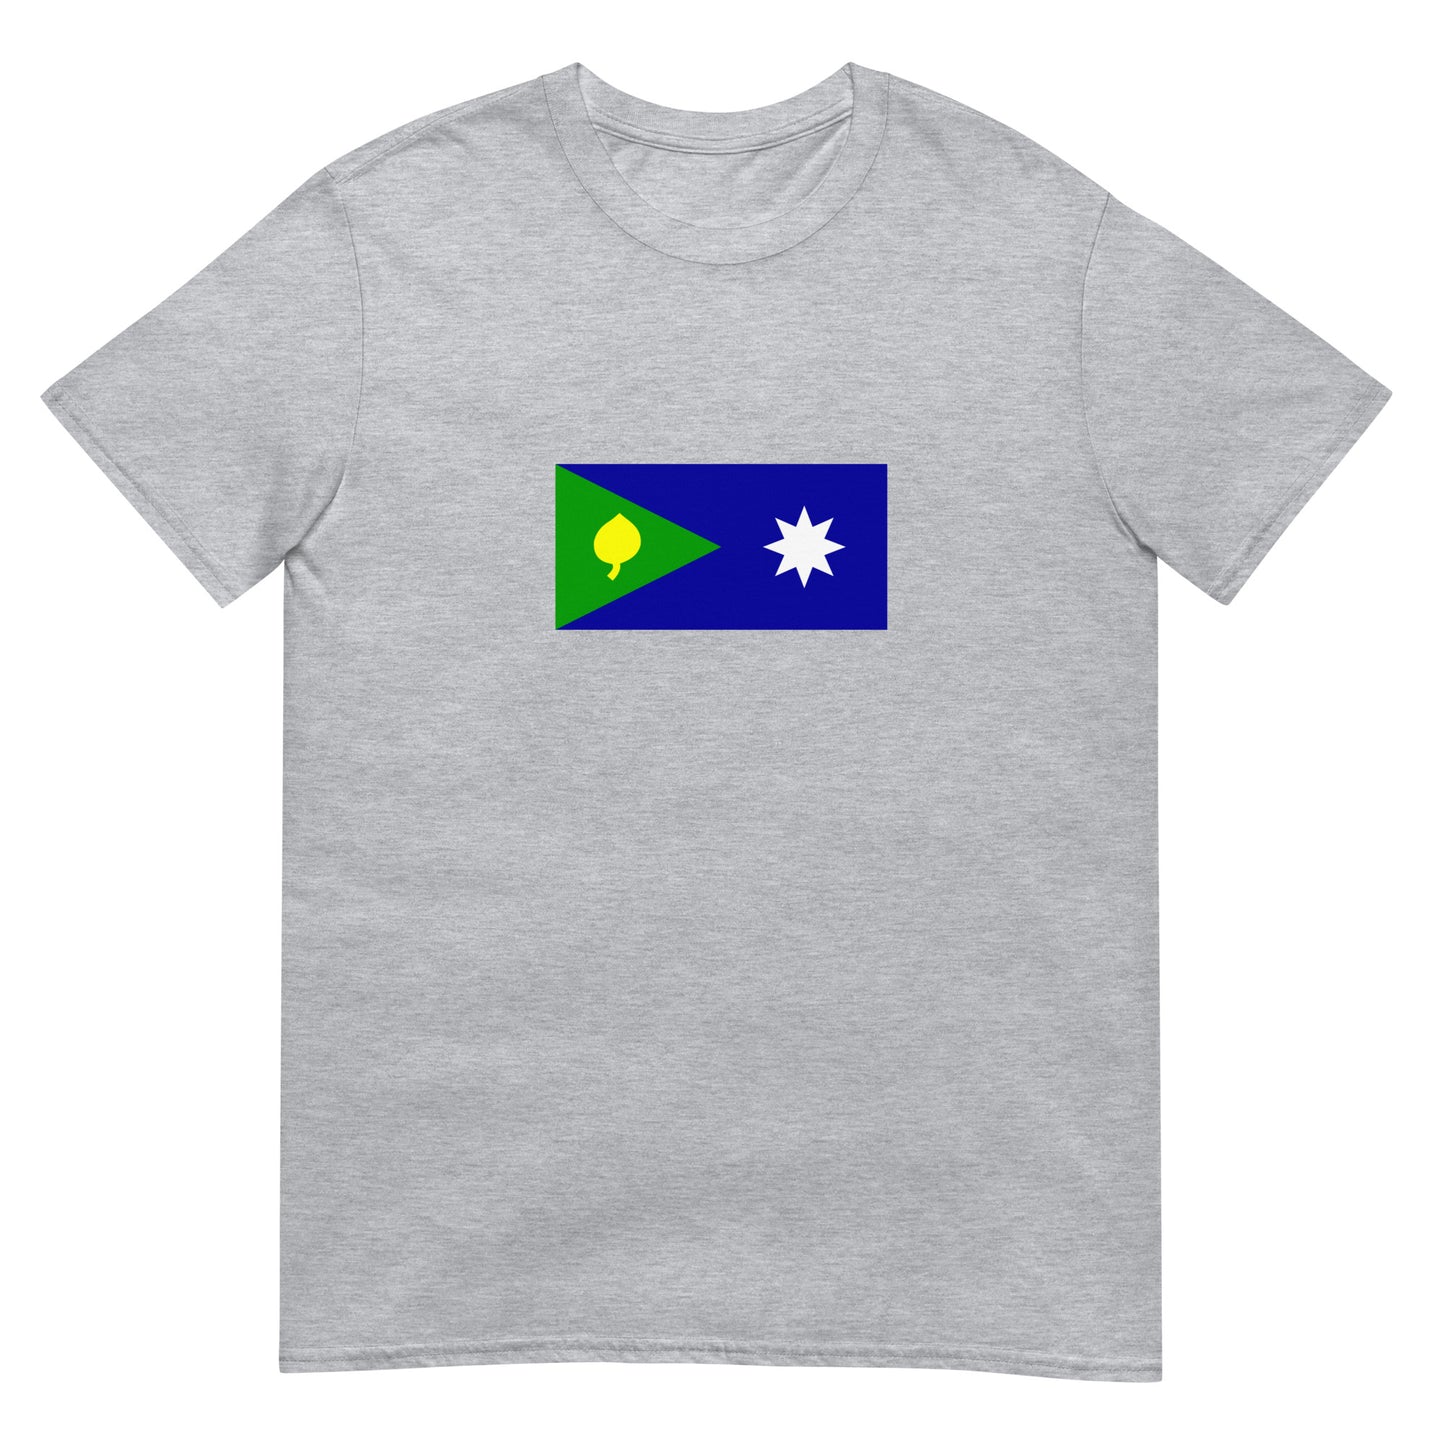 Australia - Saibai Island people | Native Australian Flag Interactive T-shirt